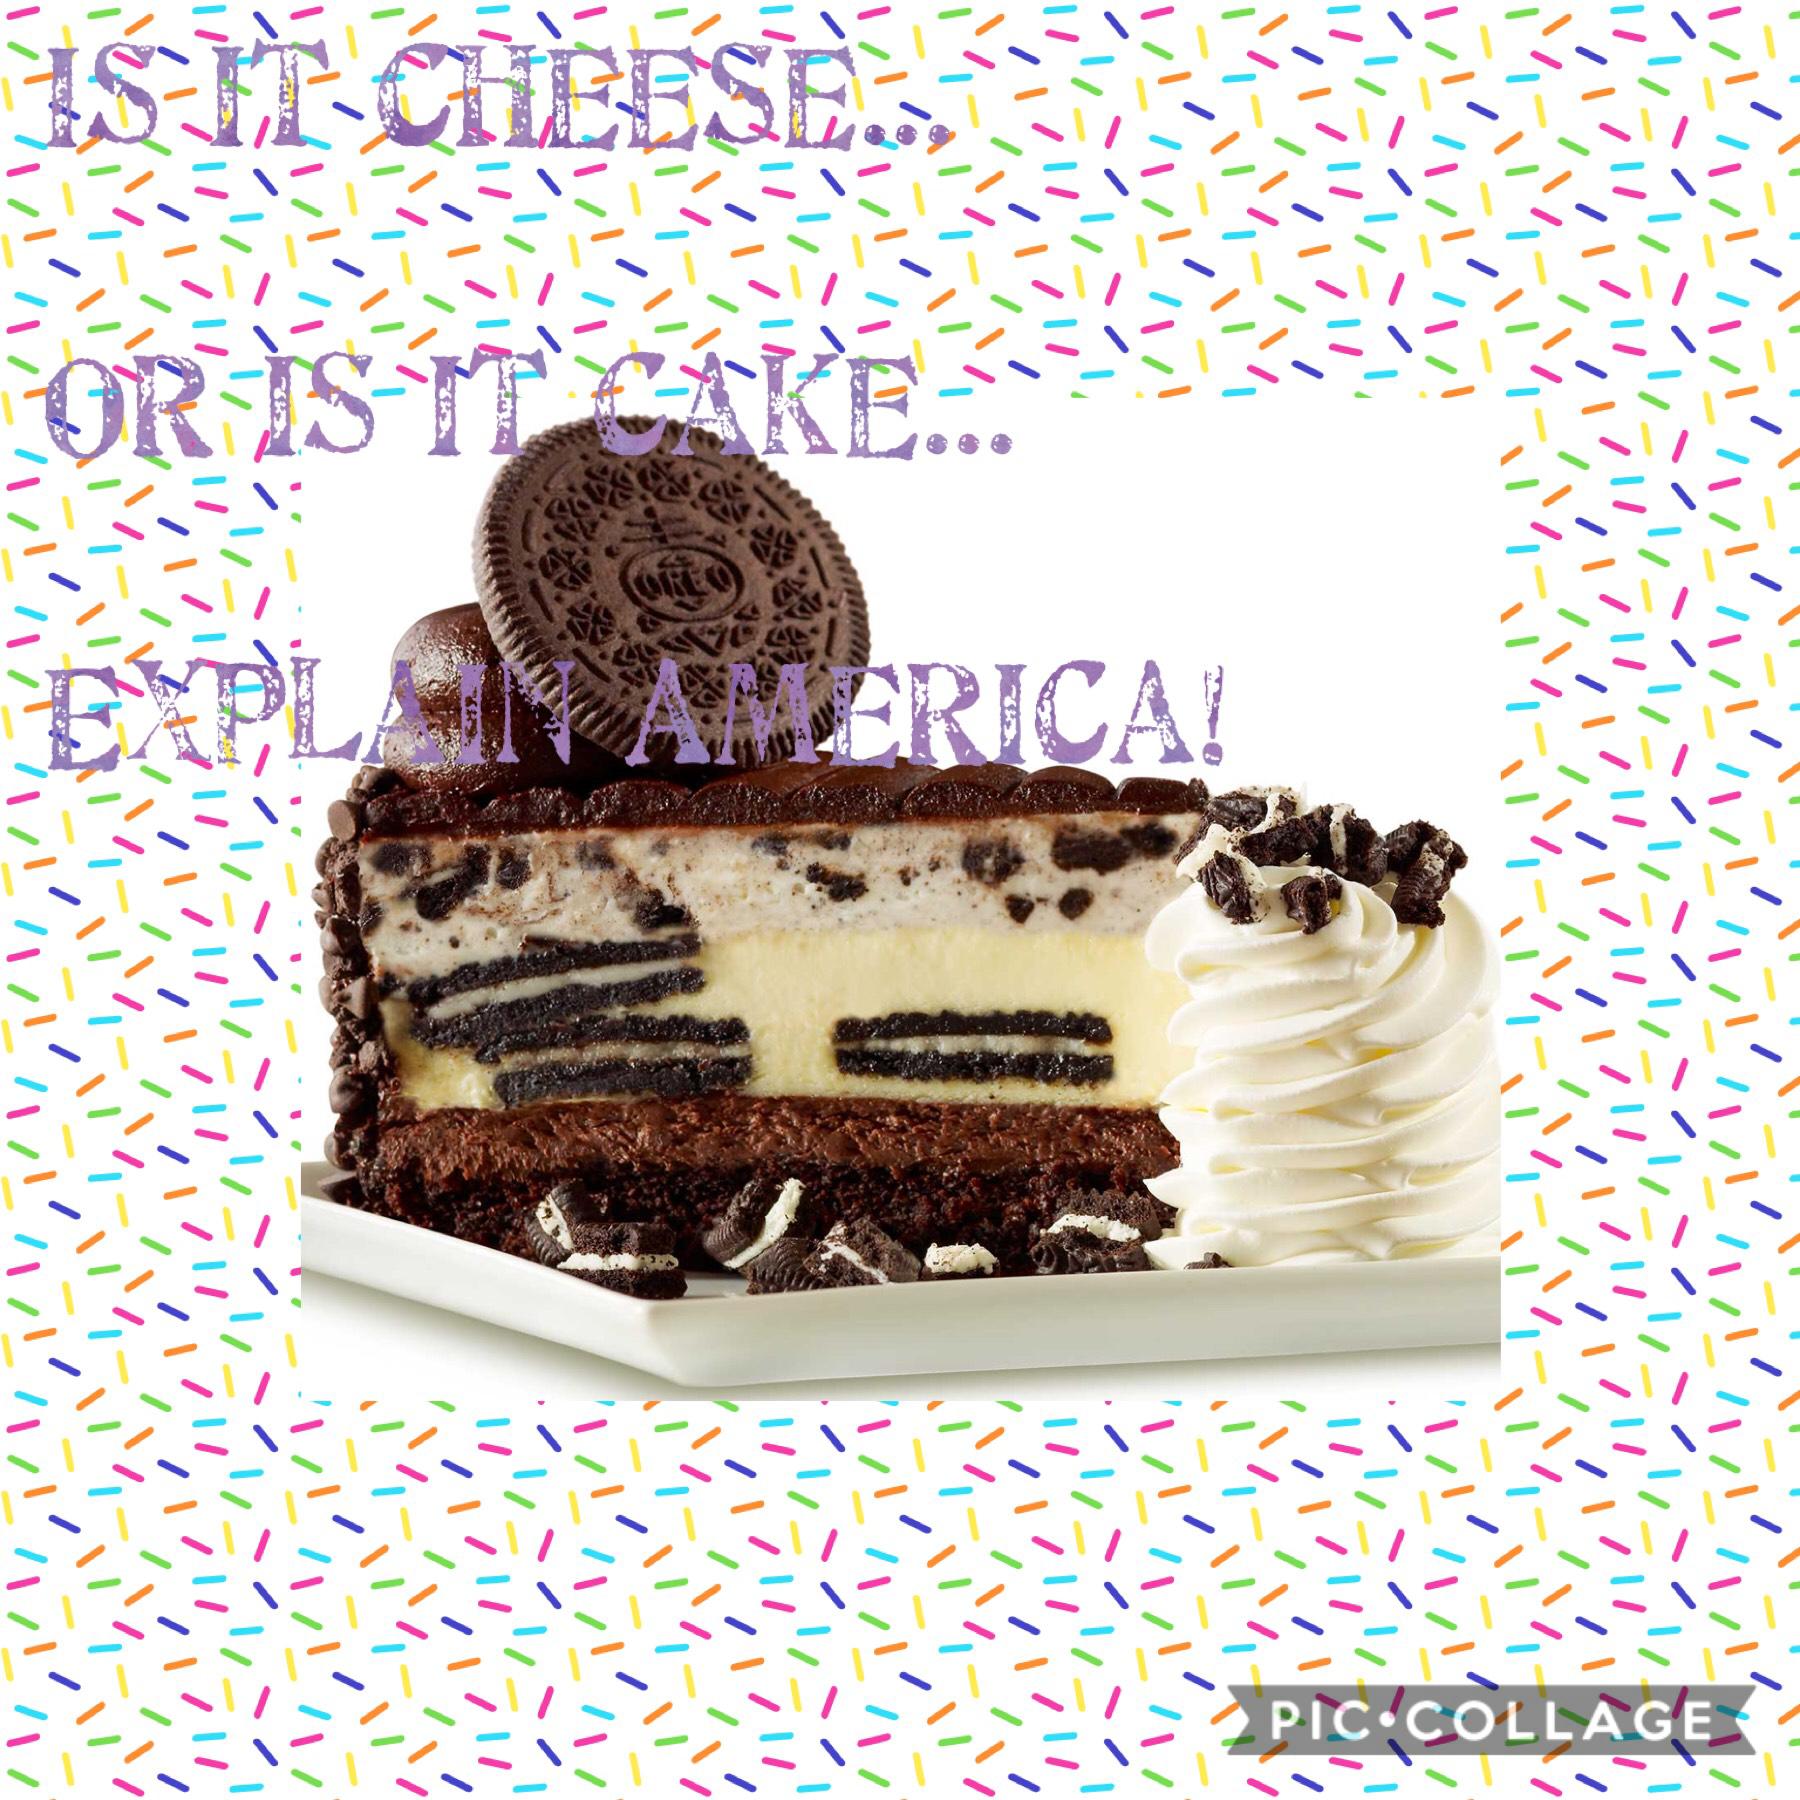 Follow this Tomas Rhett  fan page if you like cheesecake 